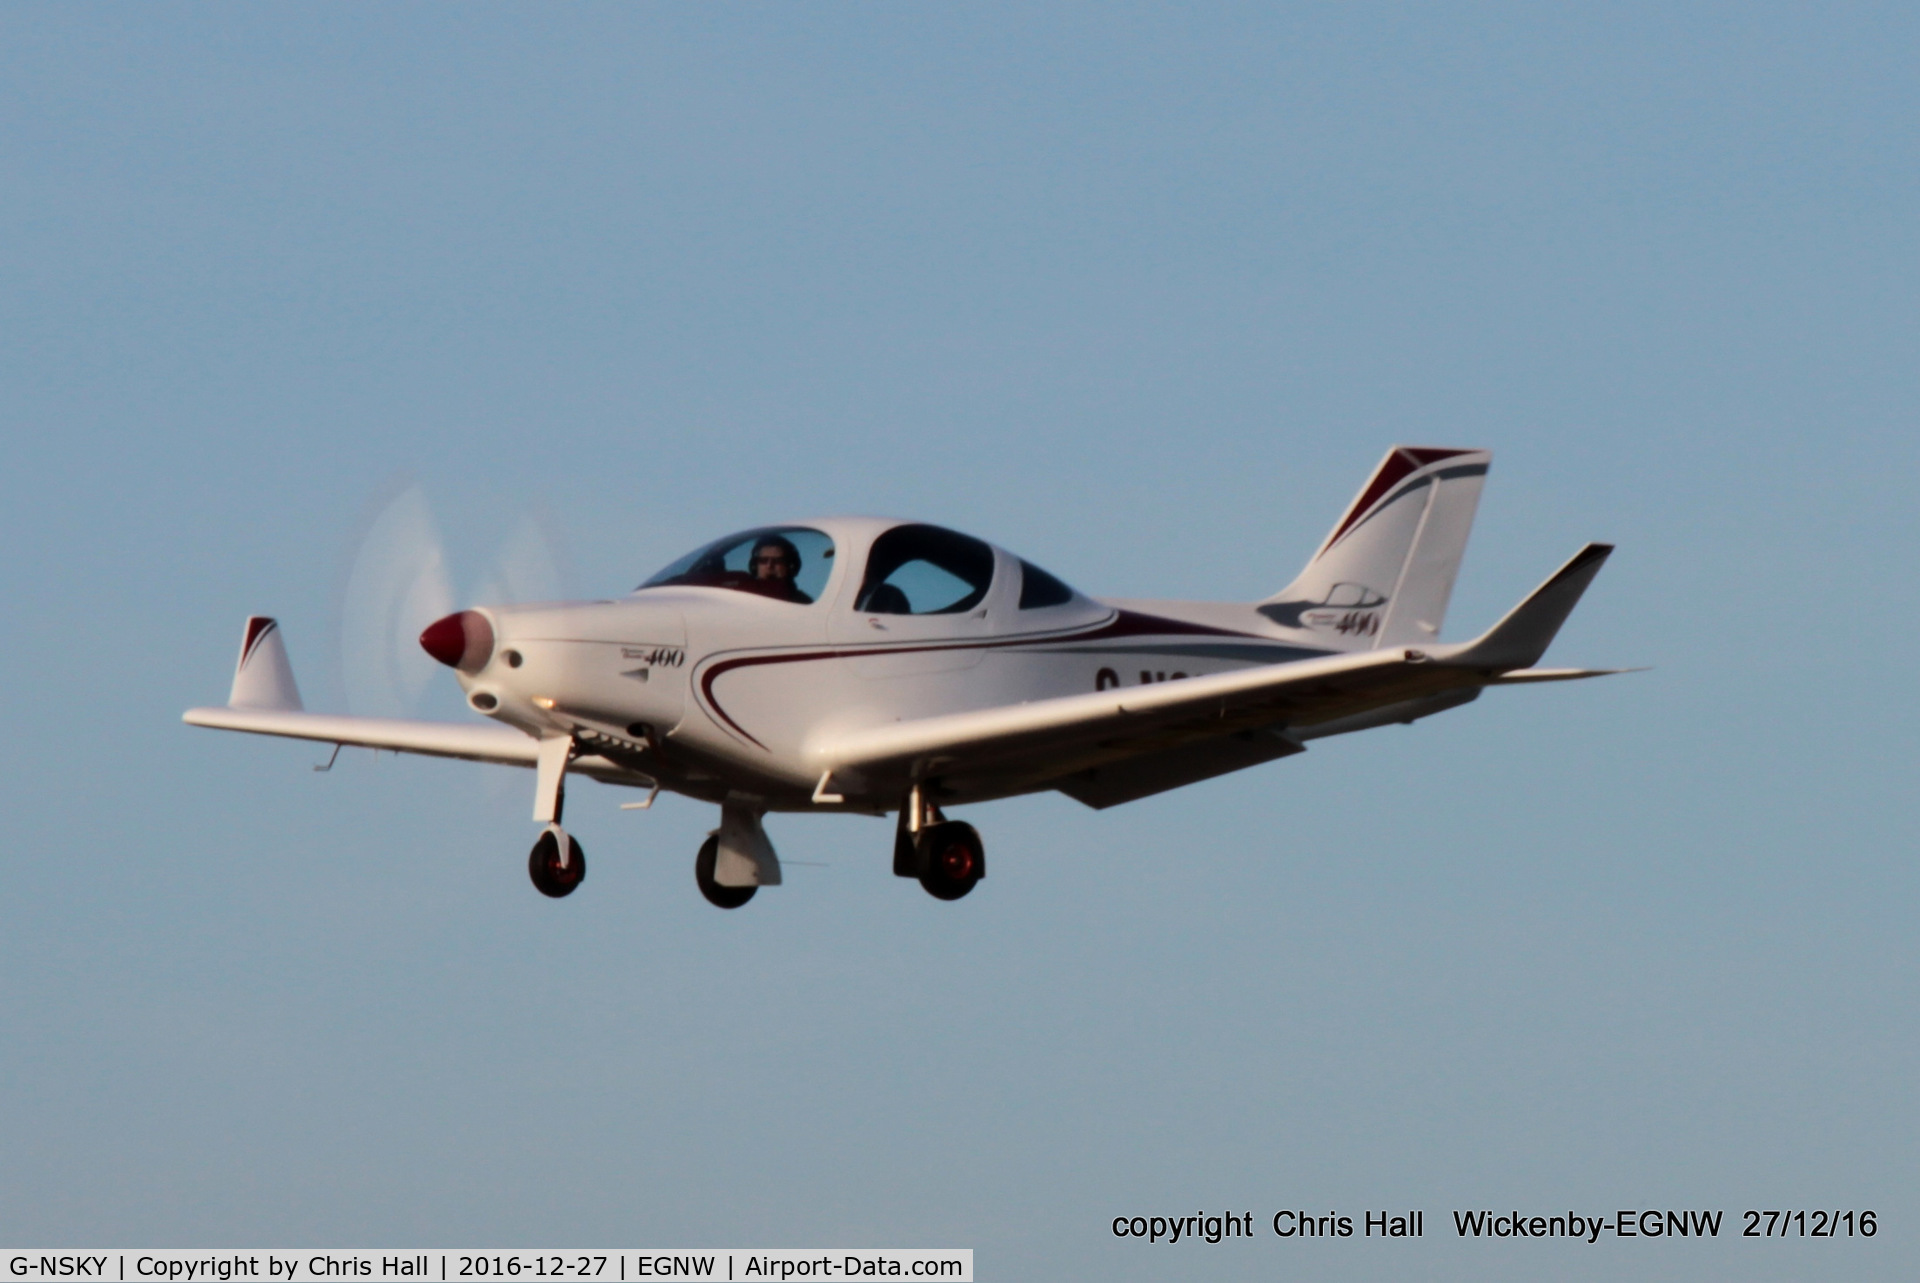 G-NSKY, 2016 Alpi Aviation Pioneer 400 C/N LAA 364-15236, at the Wickenby 